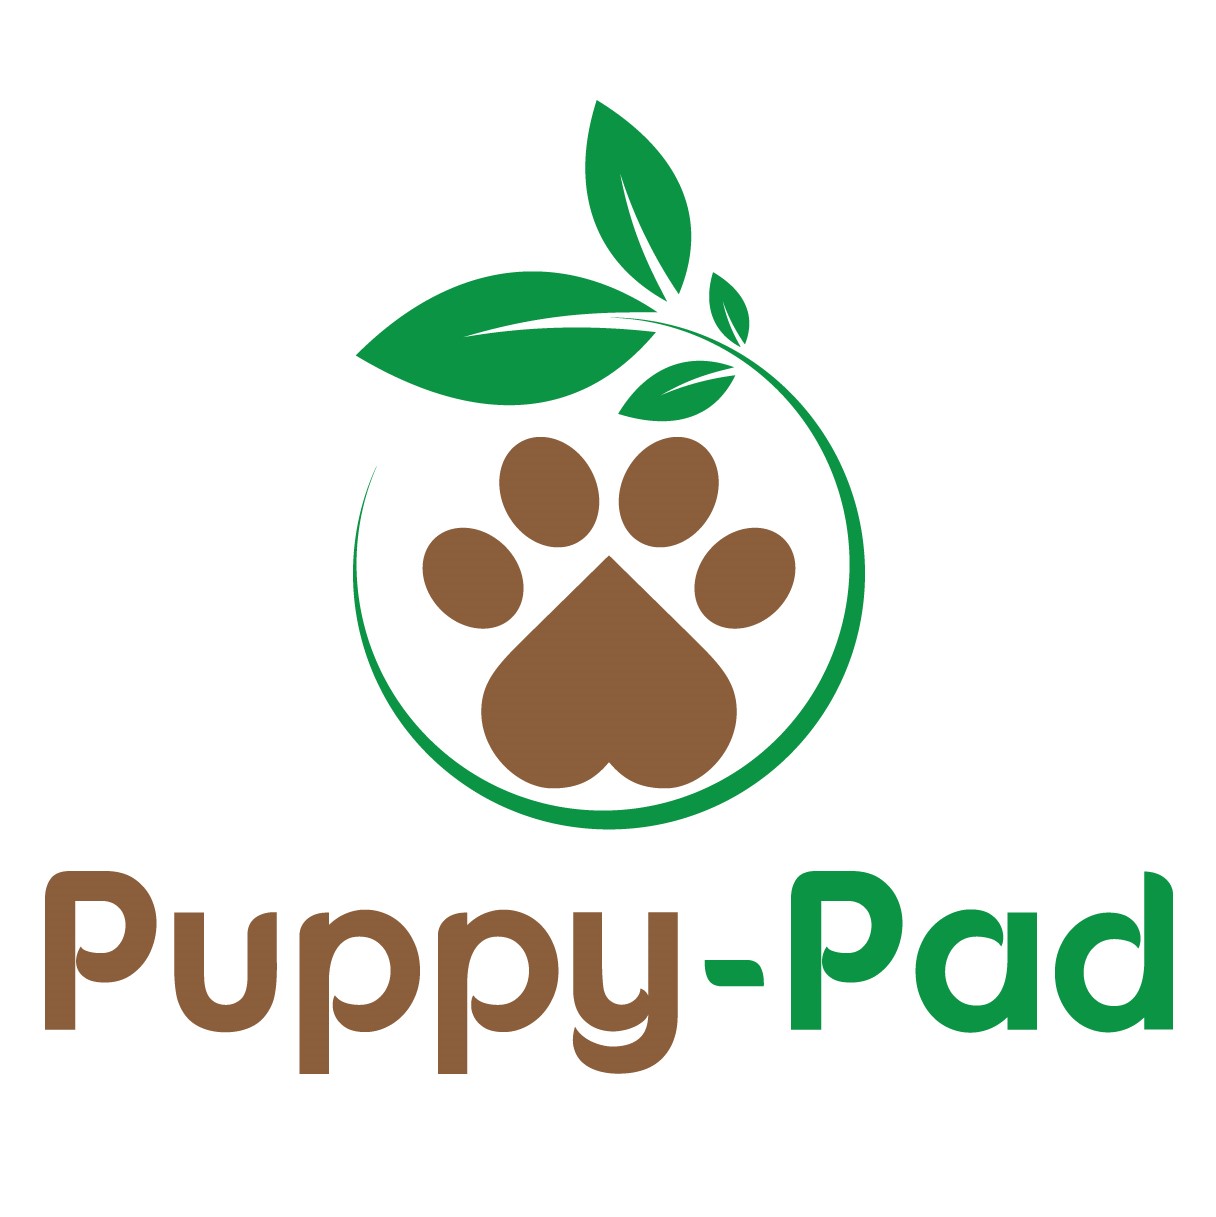 Puppy-Pad